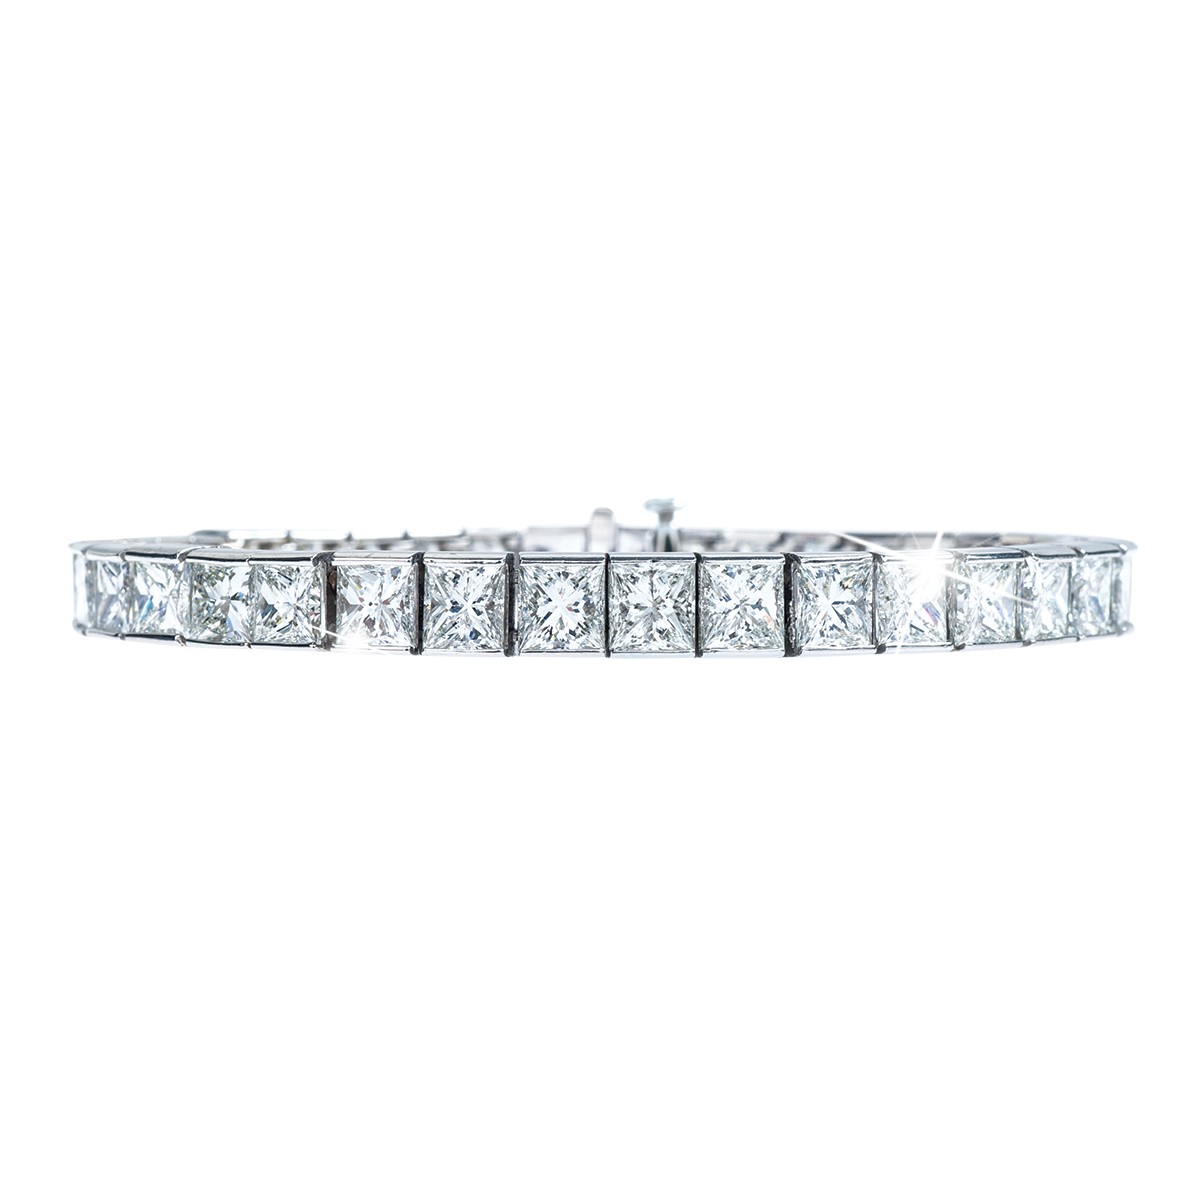 Platinum tennis bracelet set with princess cut diamonds.